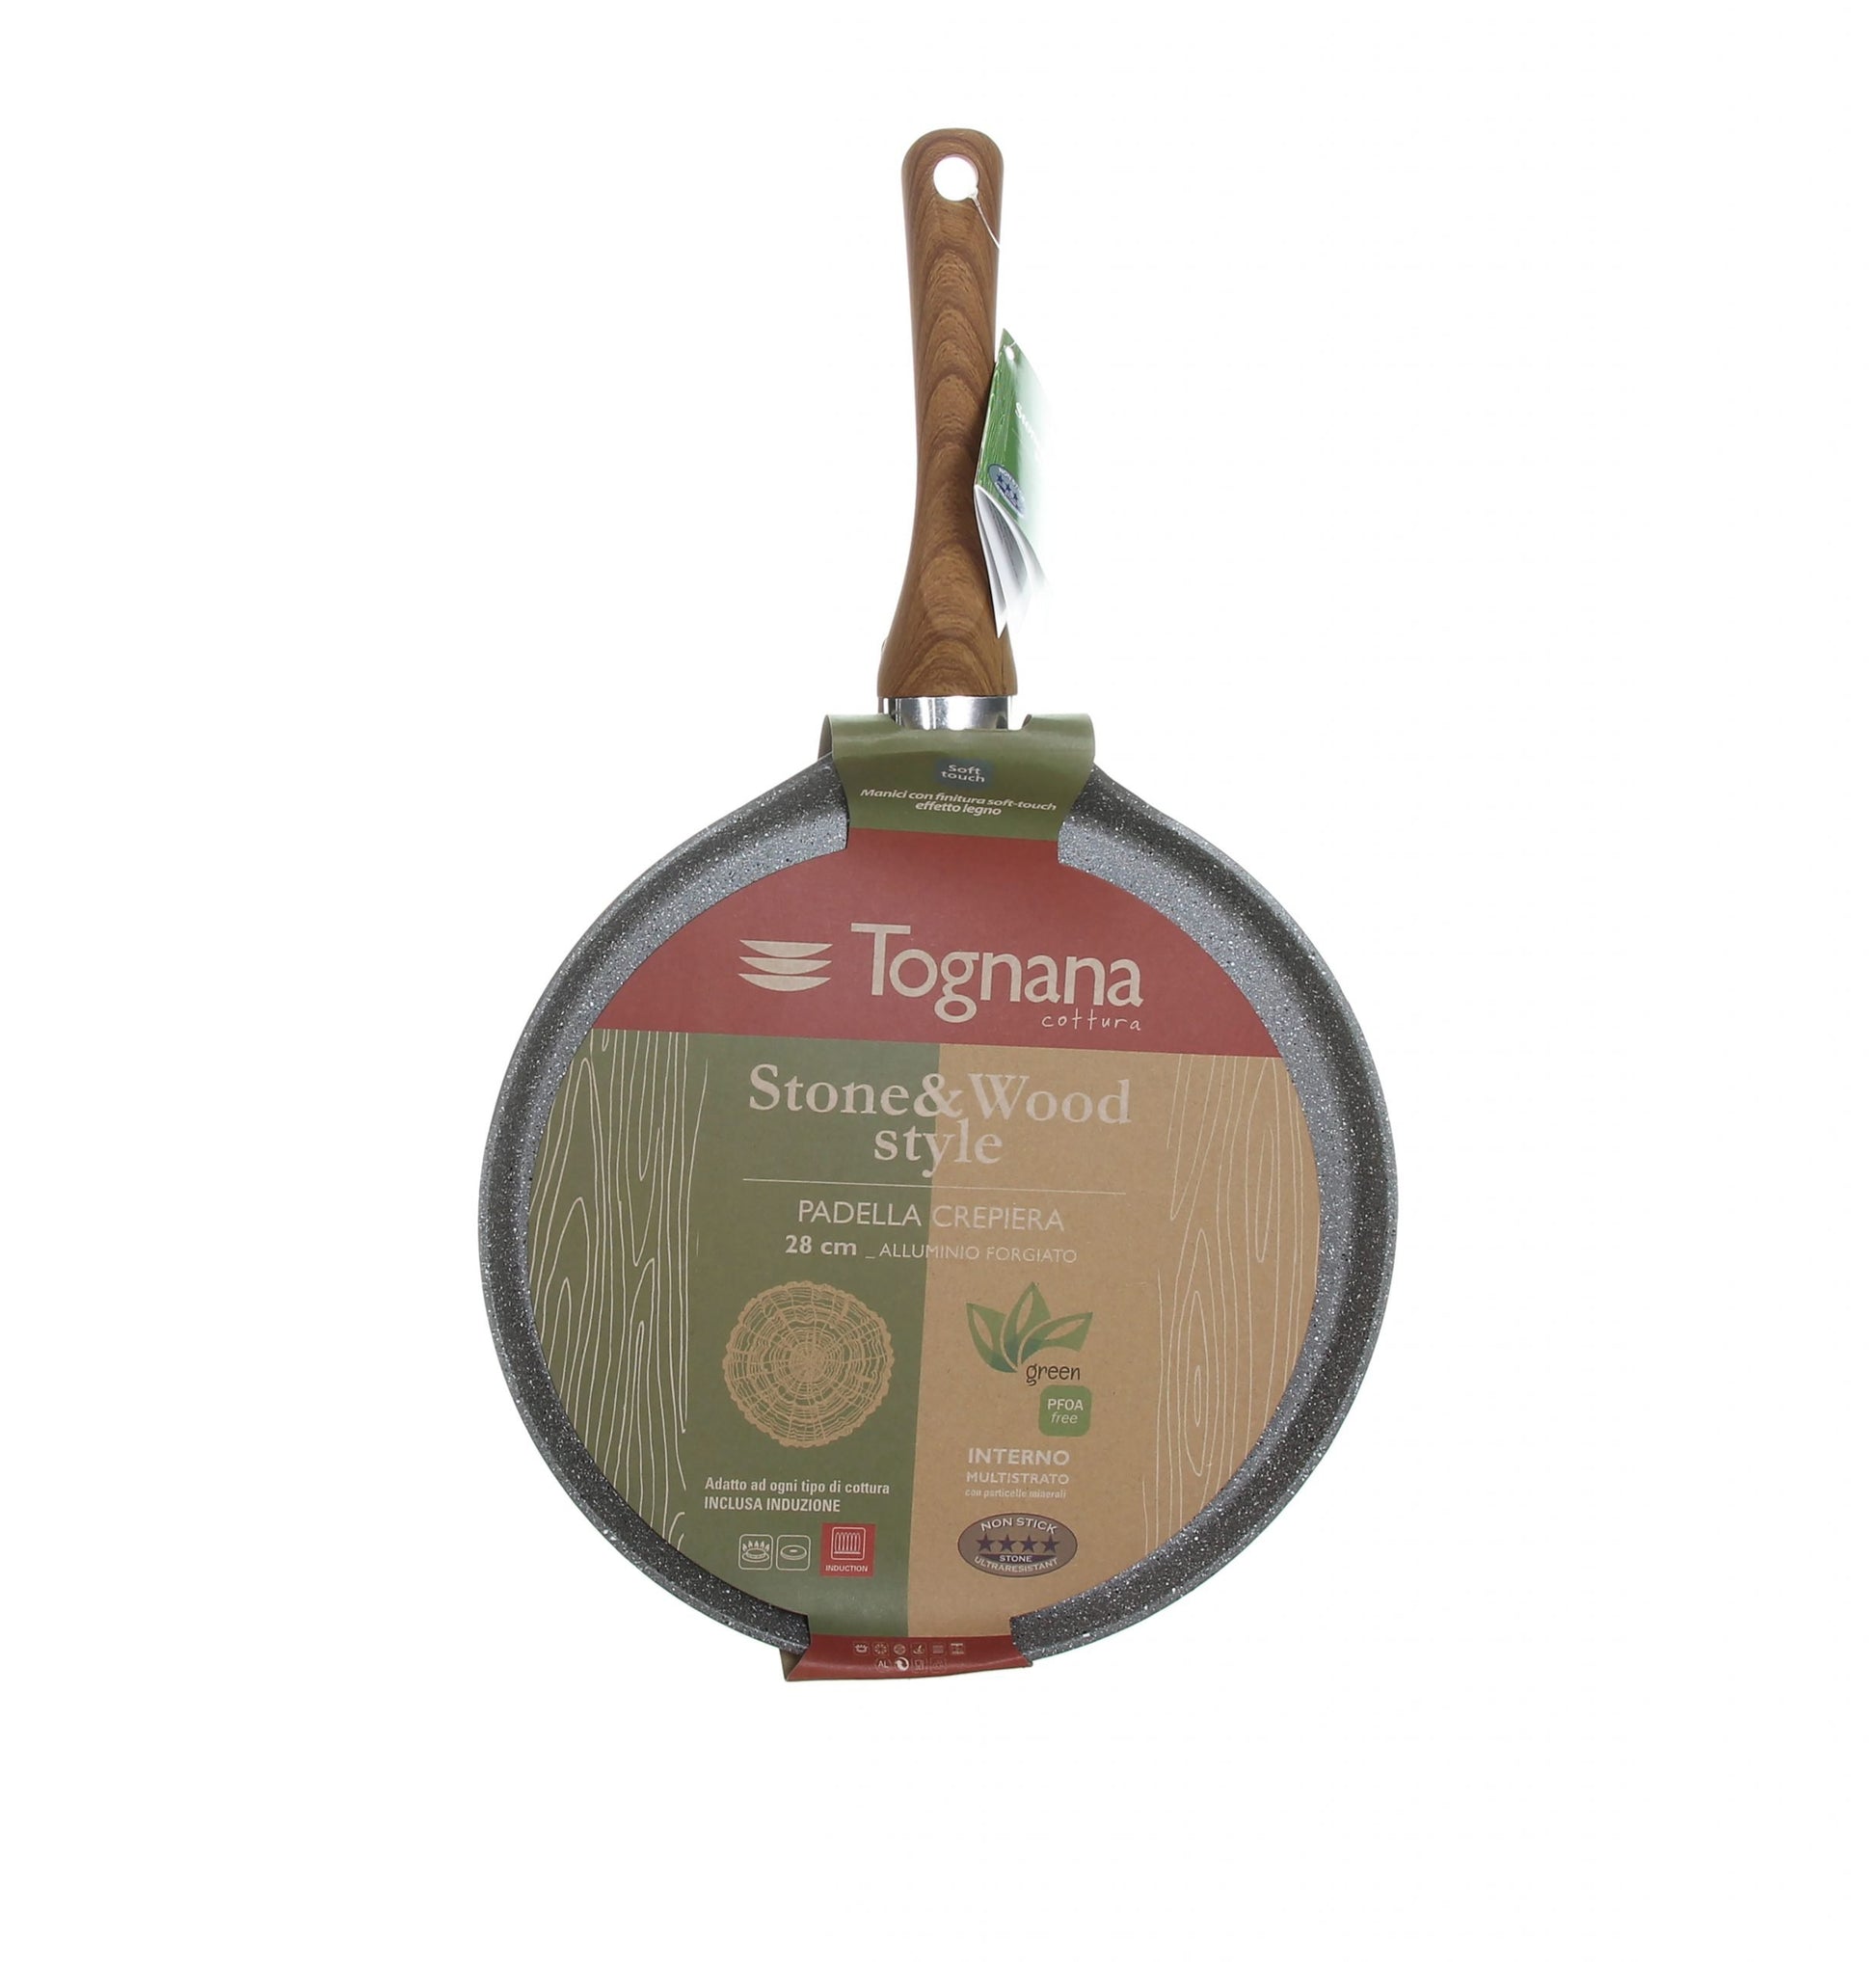 Tognana Wood & Stone Style Fry Pan 